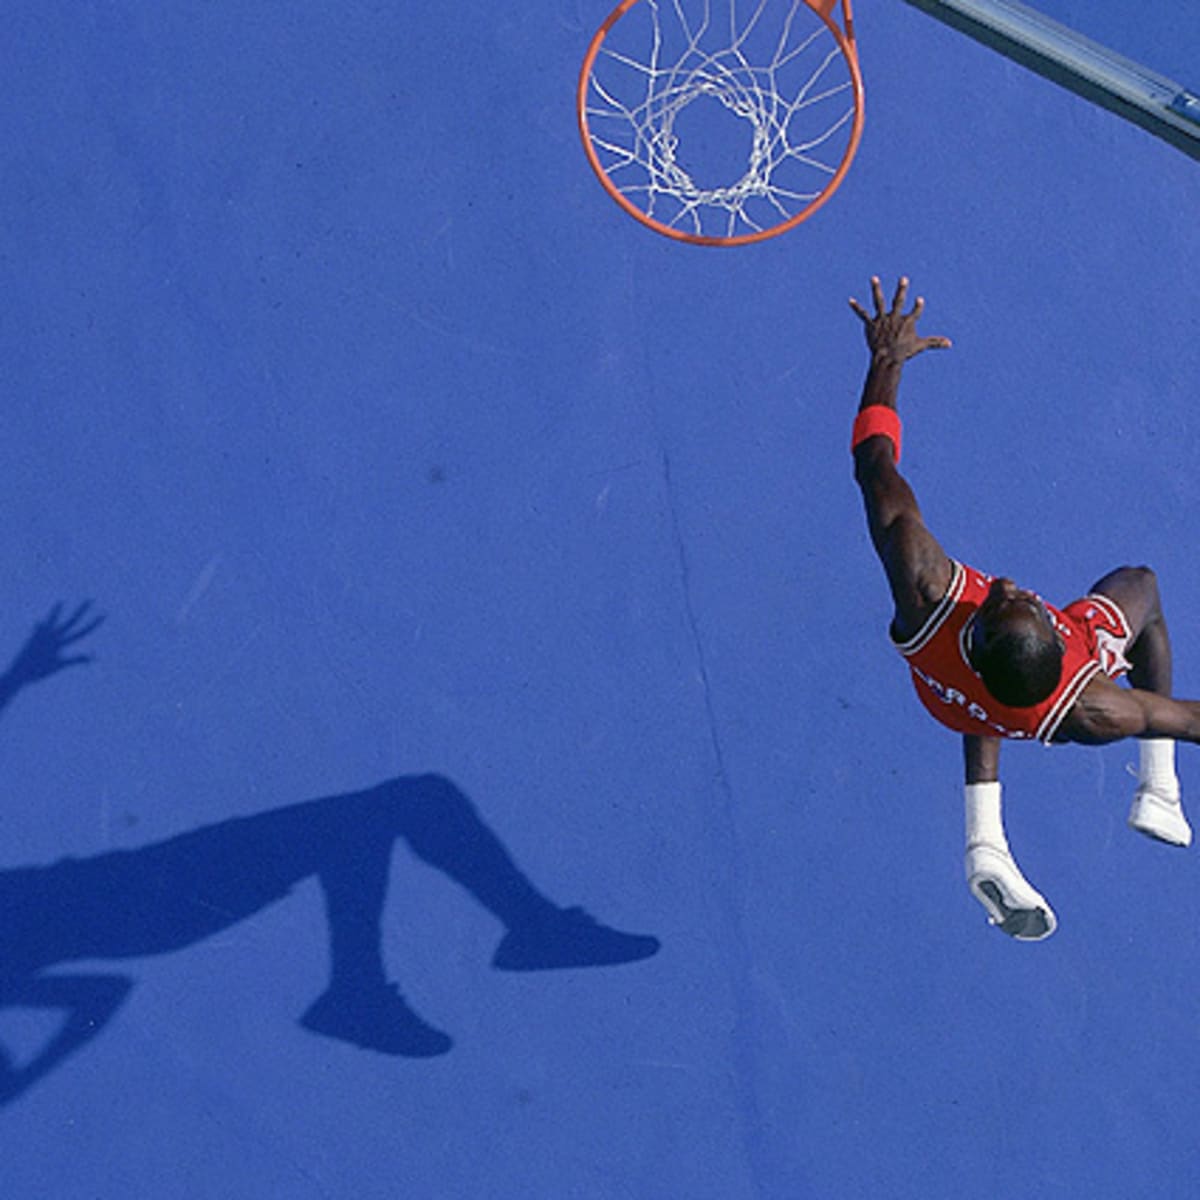 Download Michael Jordan in midair during a gravity-defying dunk